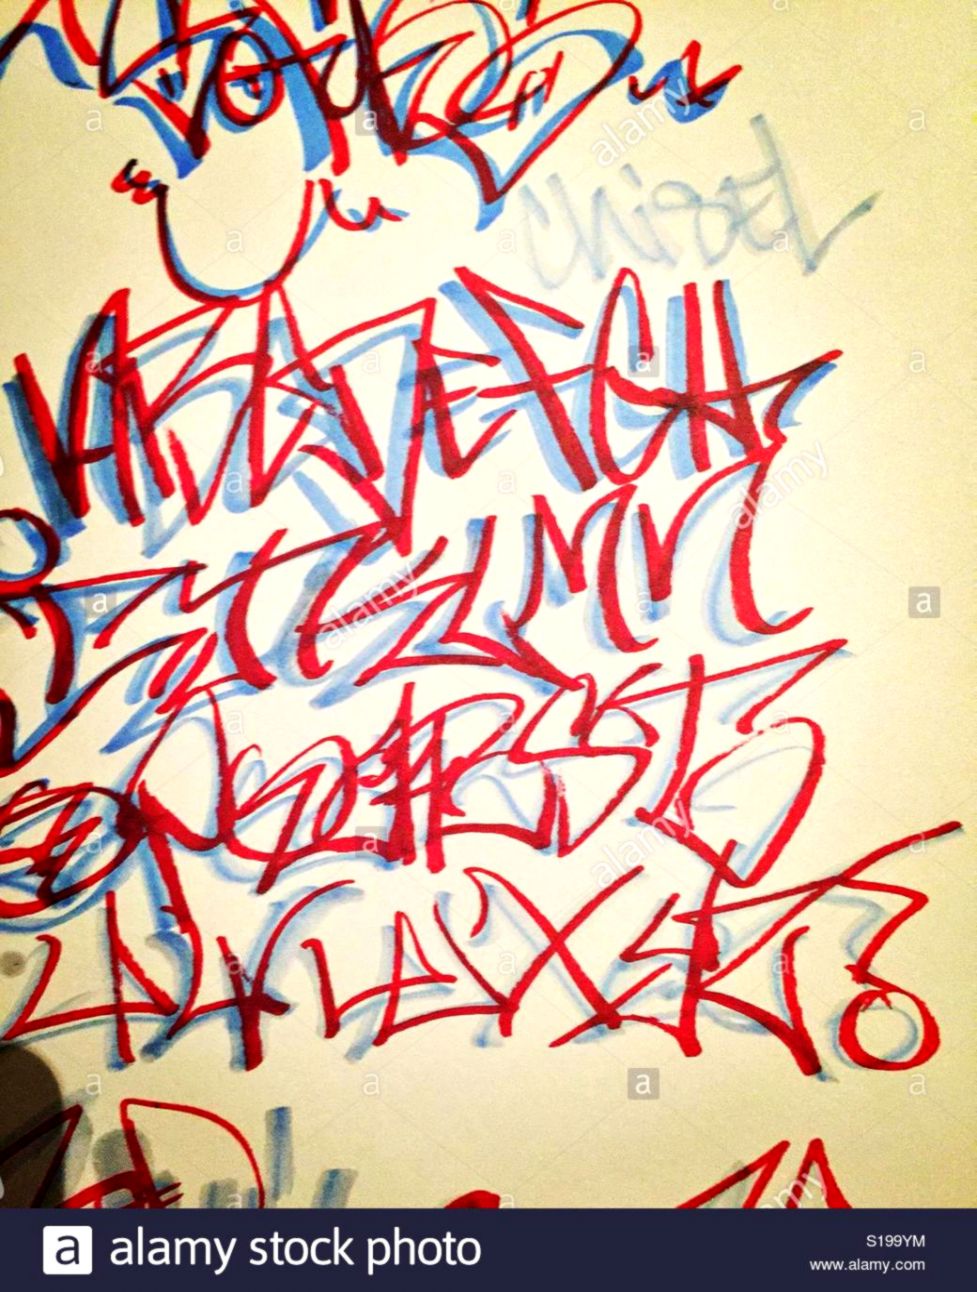 Graffiti alphabet red and blue 3D Stock Photo 310606680 Alamy